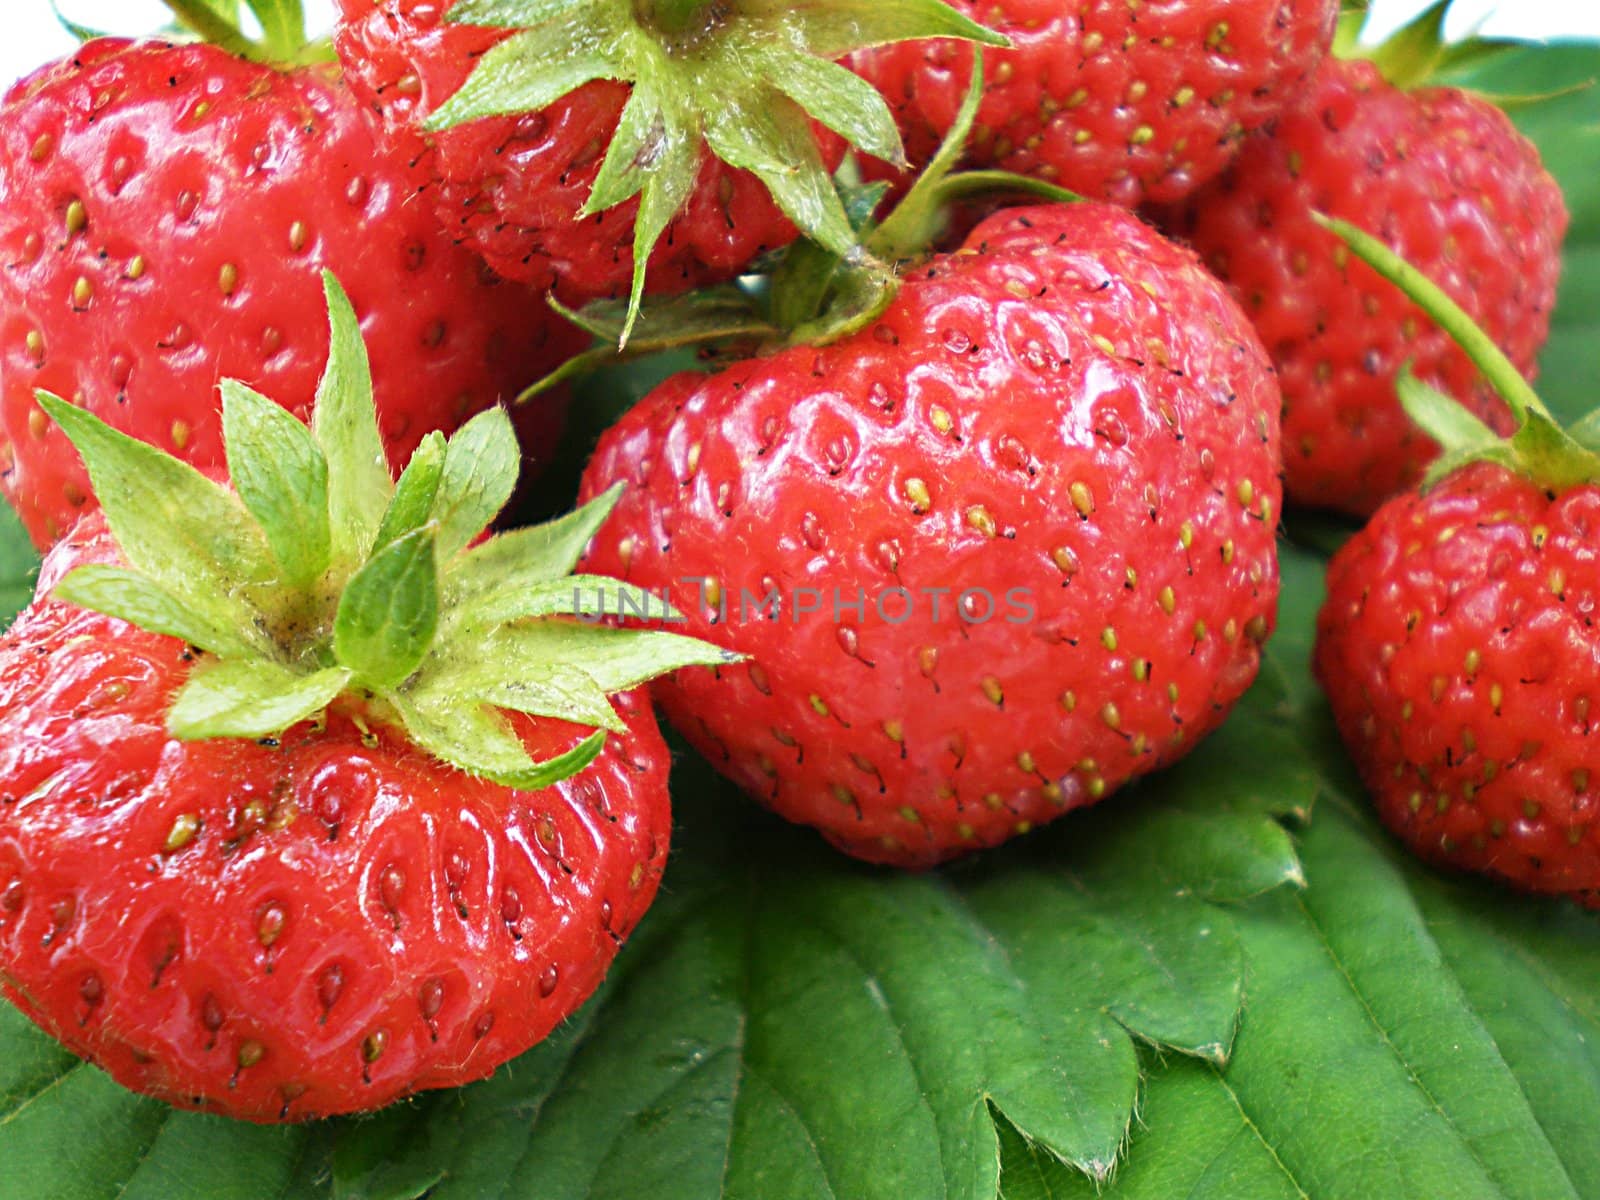 strawberries on green leaves